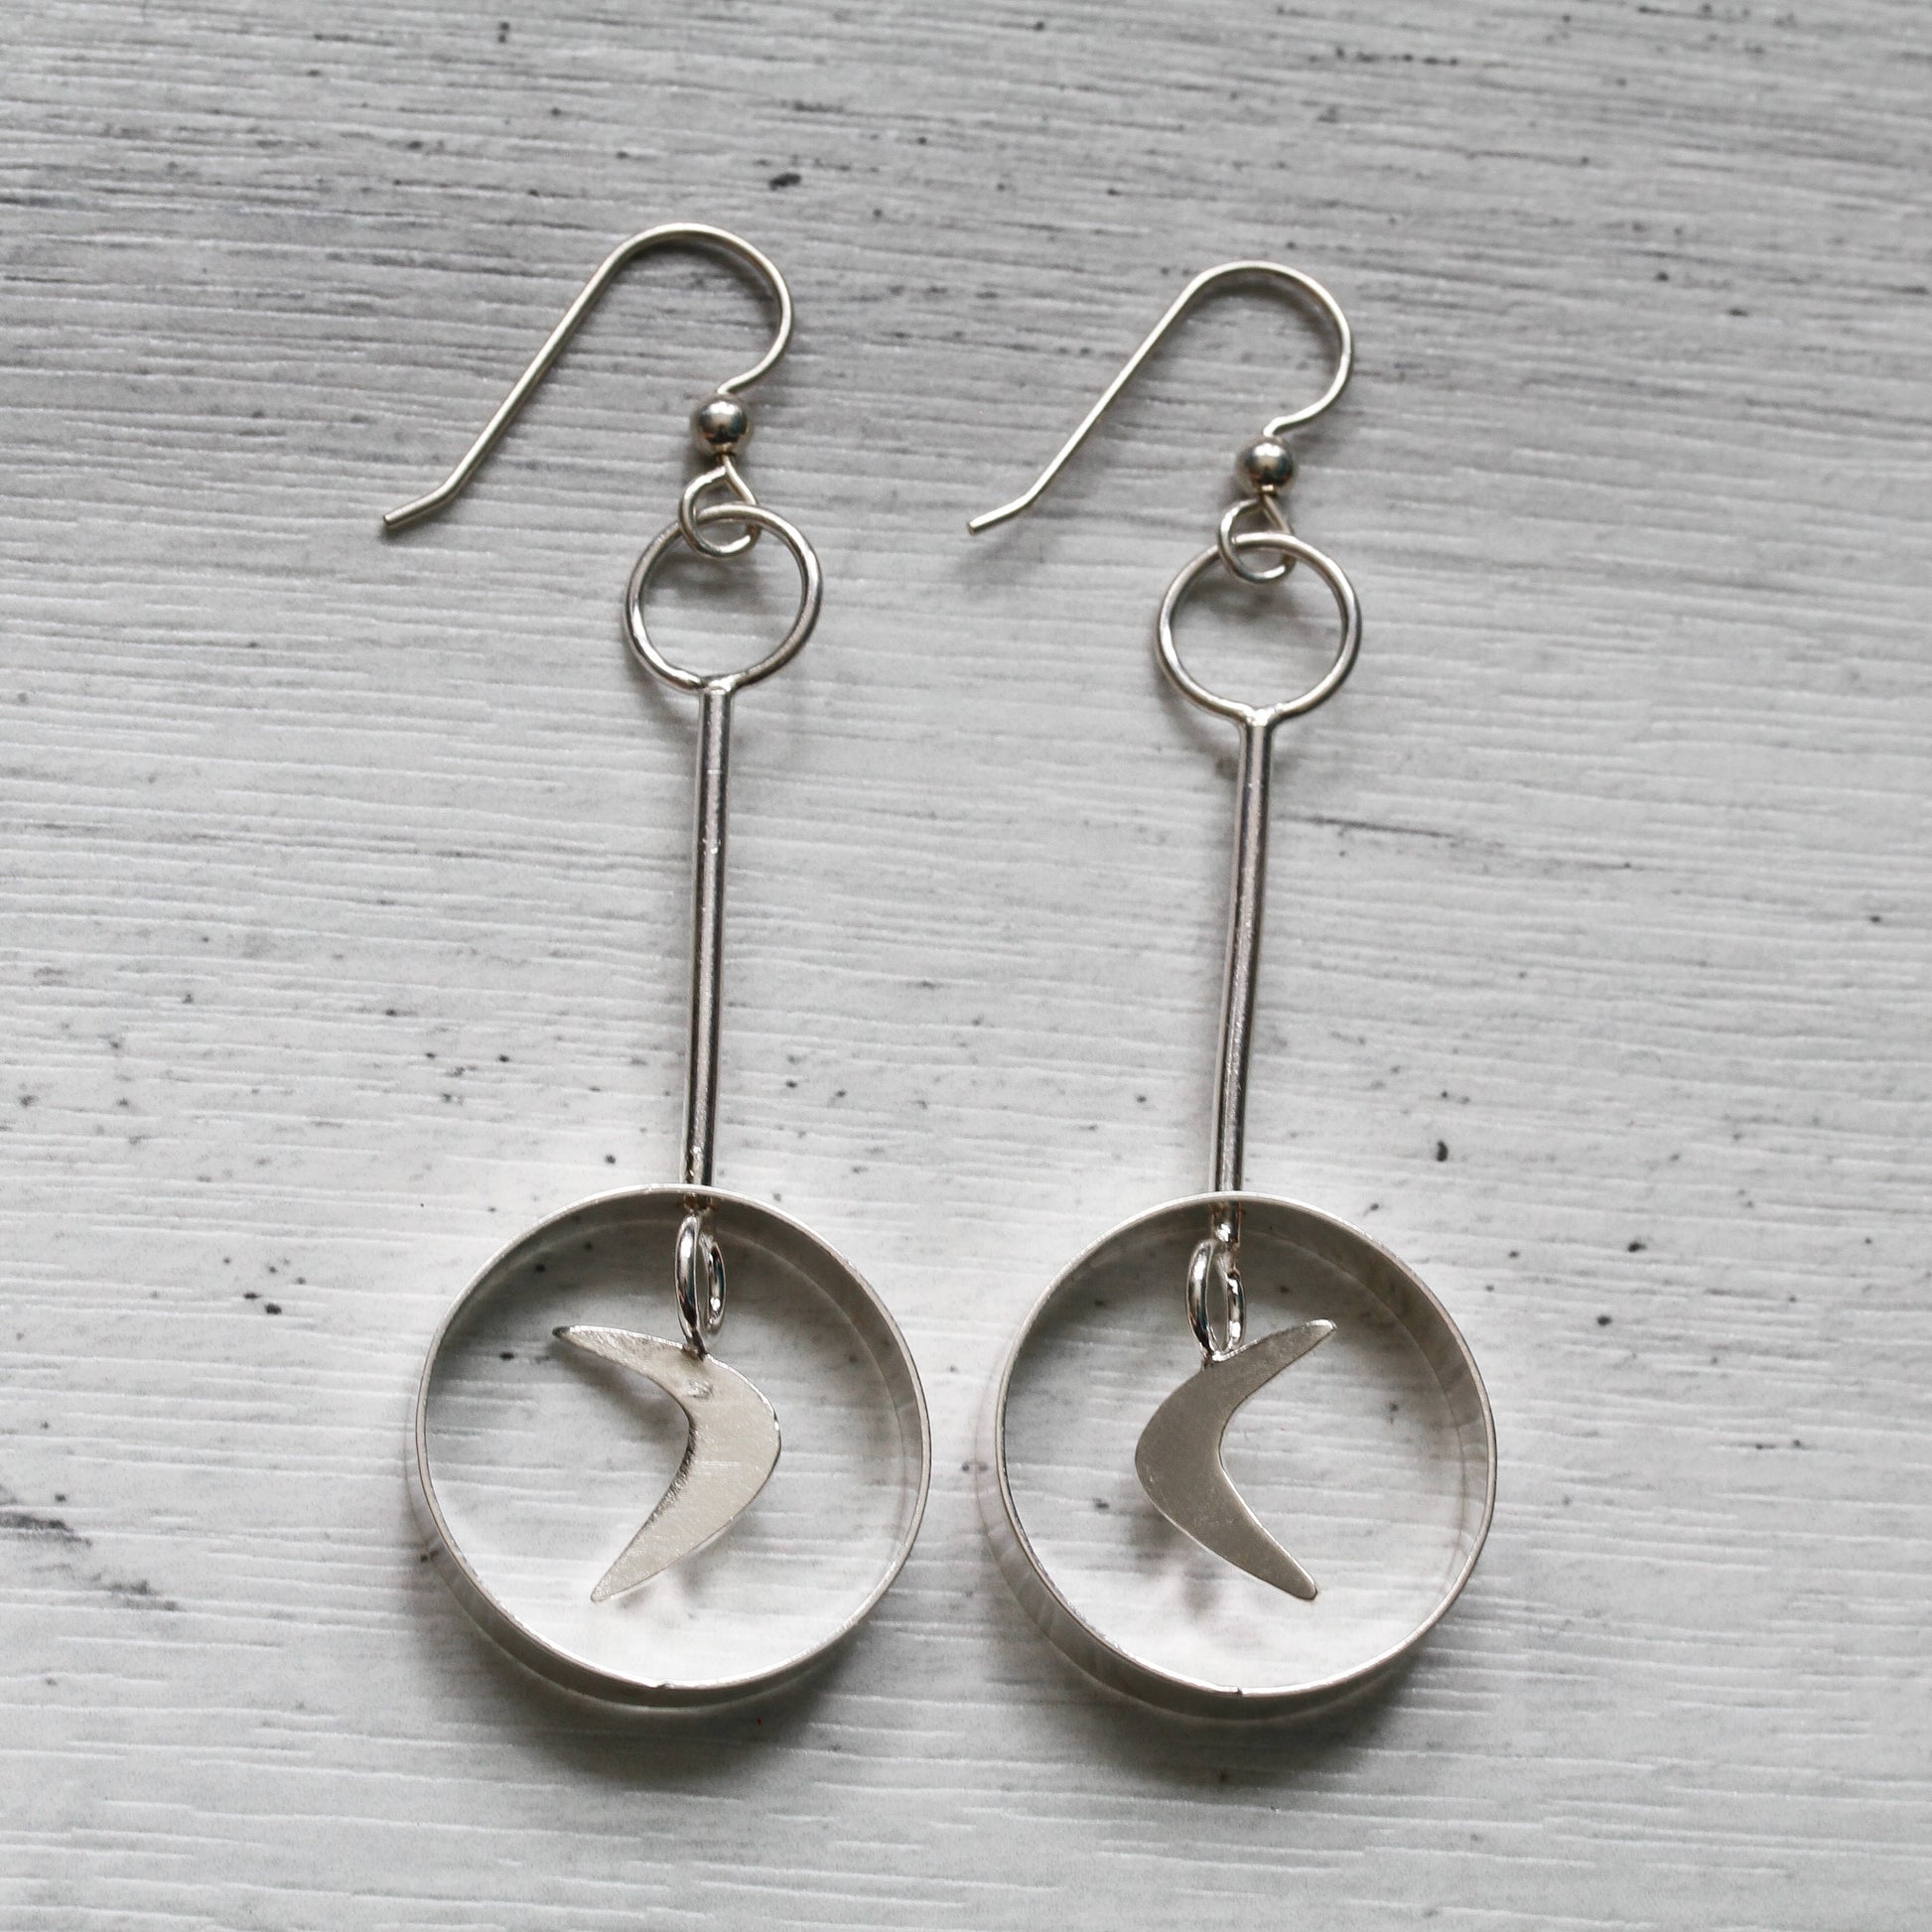 Mid century modern sterling silver earrings boomerang